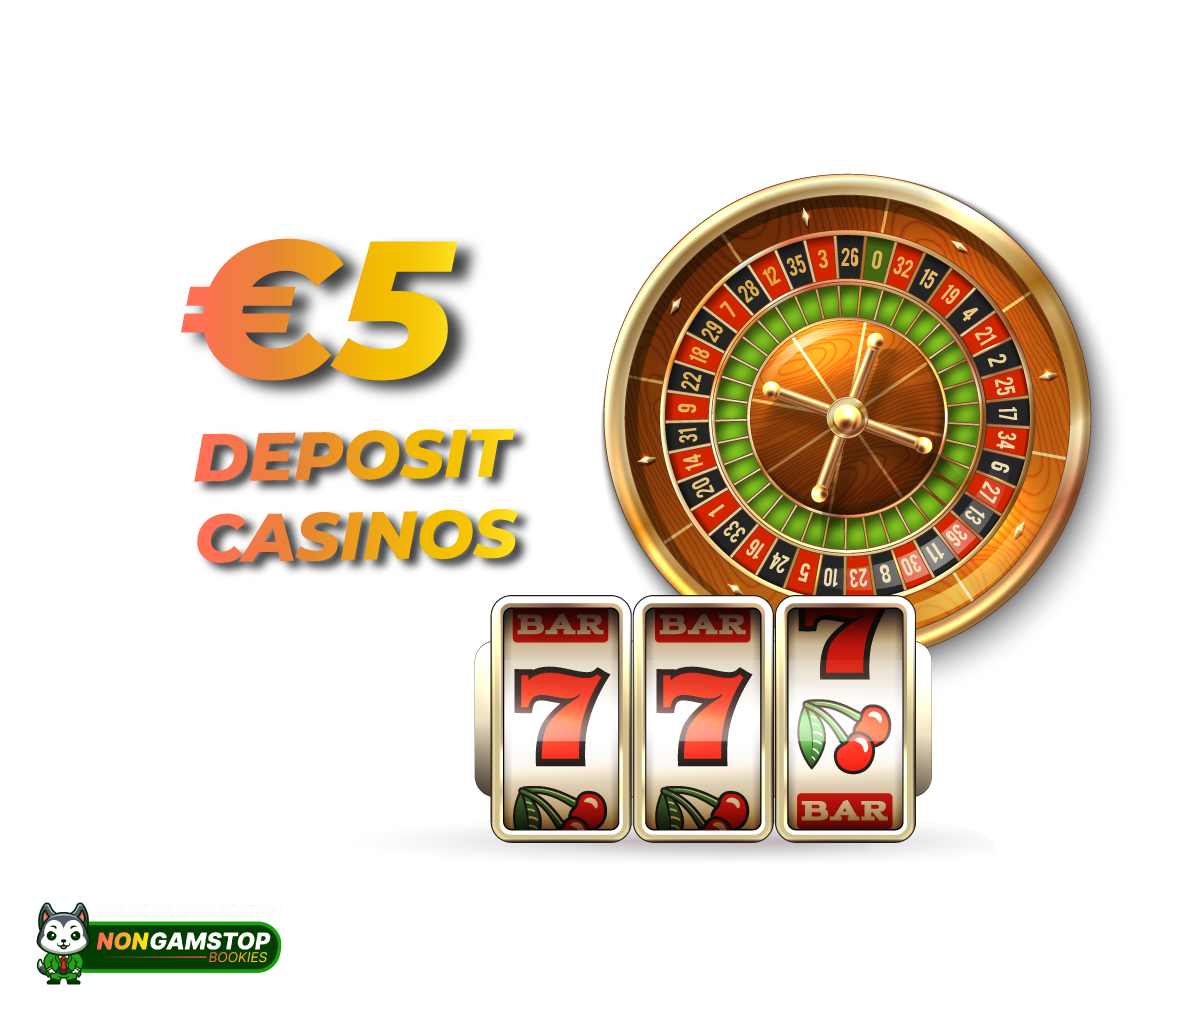 €5 Deposit Casinos